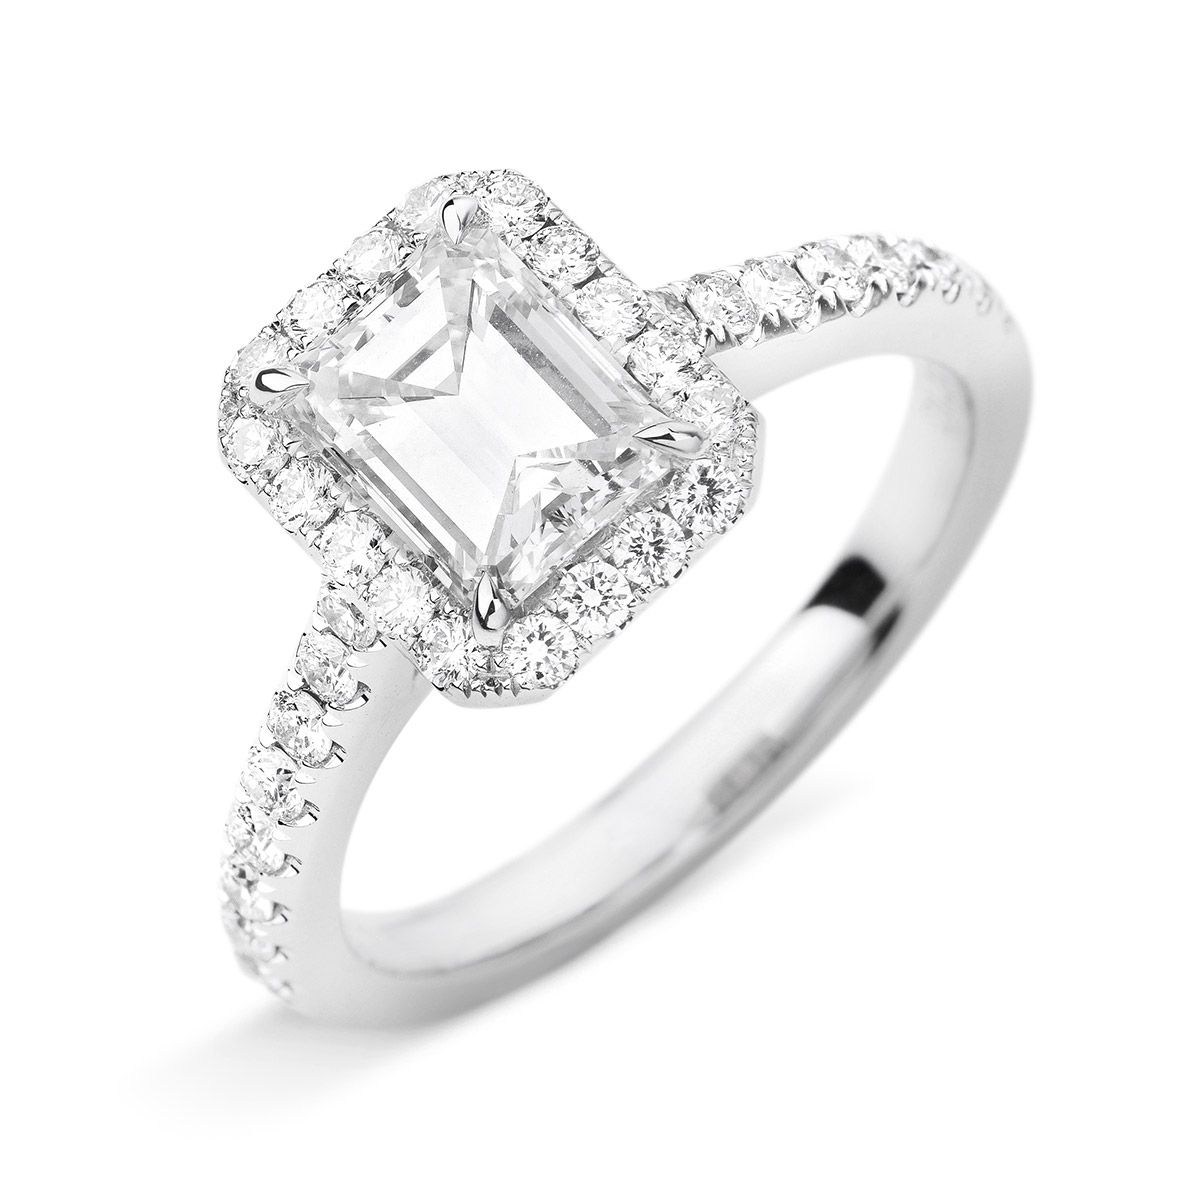  White Diamond Ring, 1.20 Ct. (1.65 Ct. TW), Emerald shape, GIA Certified, 1219872002